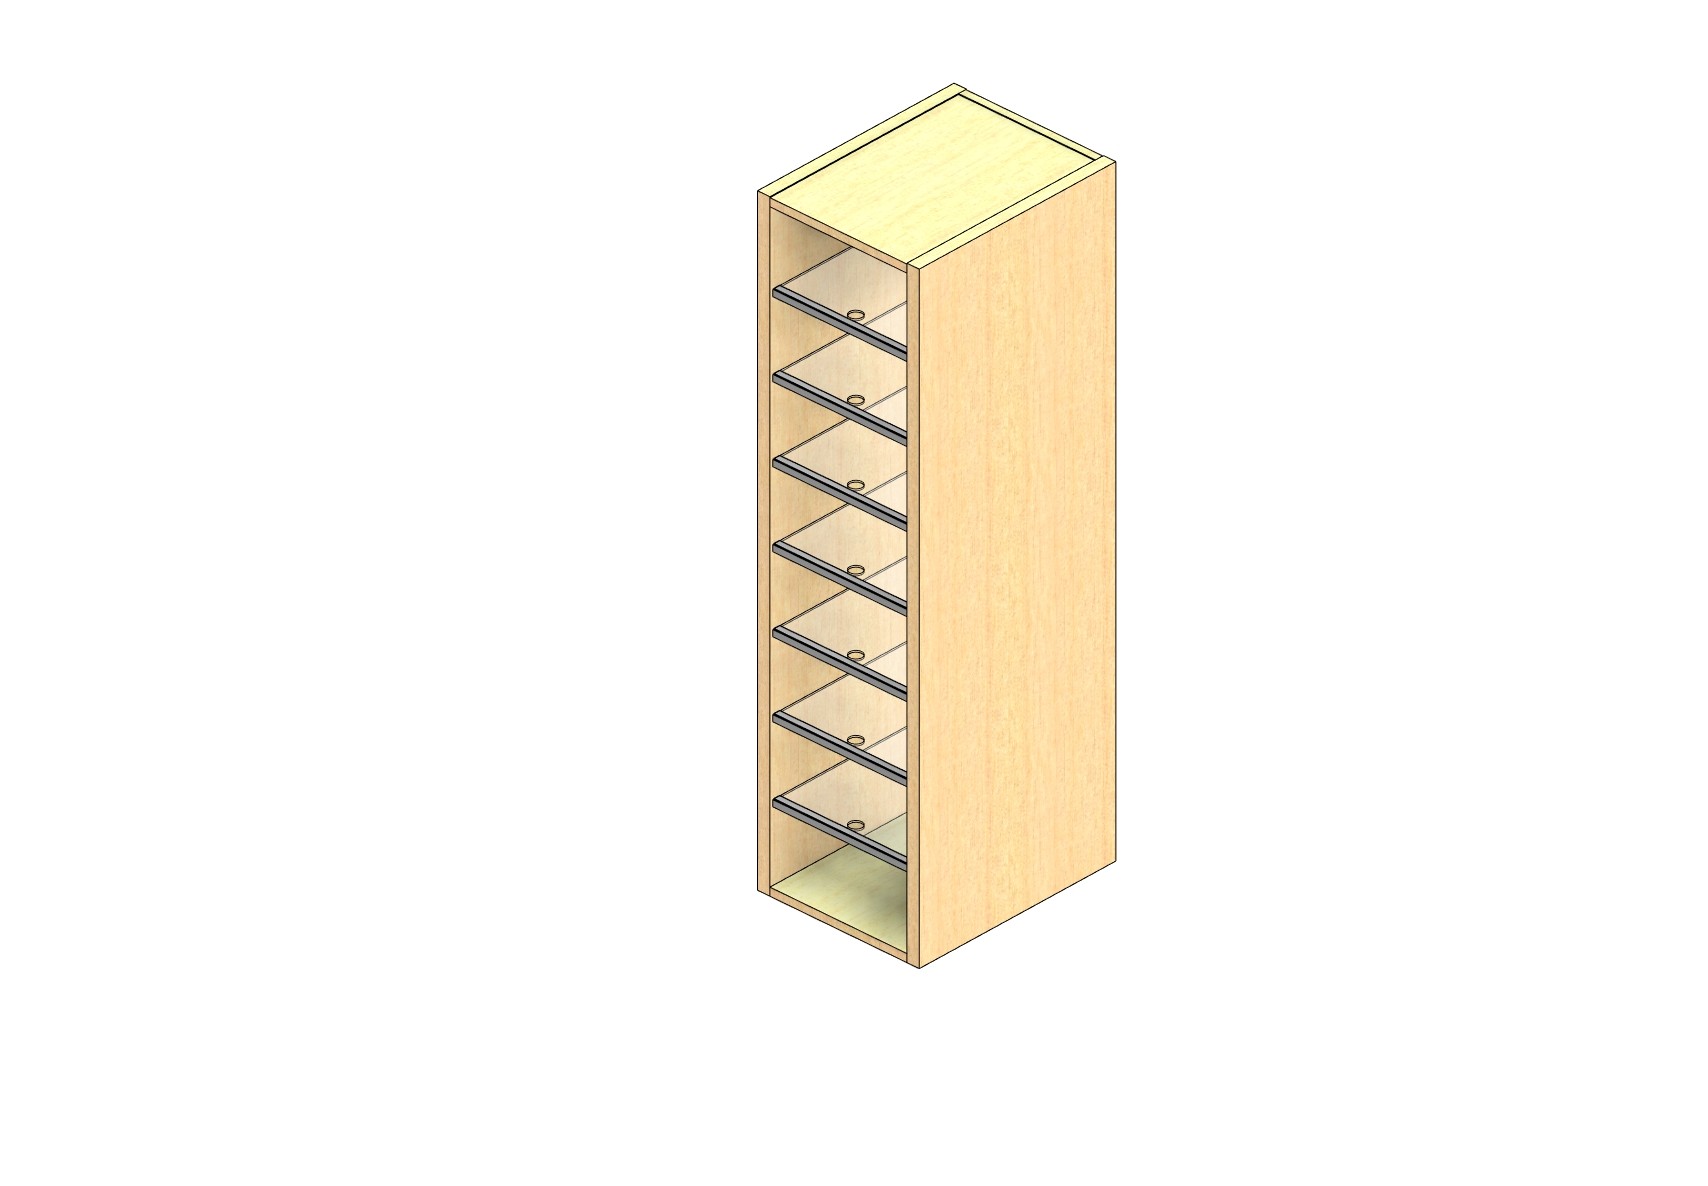 Legal Sized Plexi Back Sort Module - 1 Column - 48" Sorting Height w/ No Riser